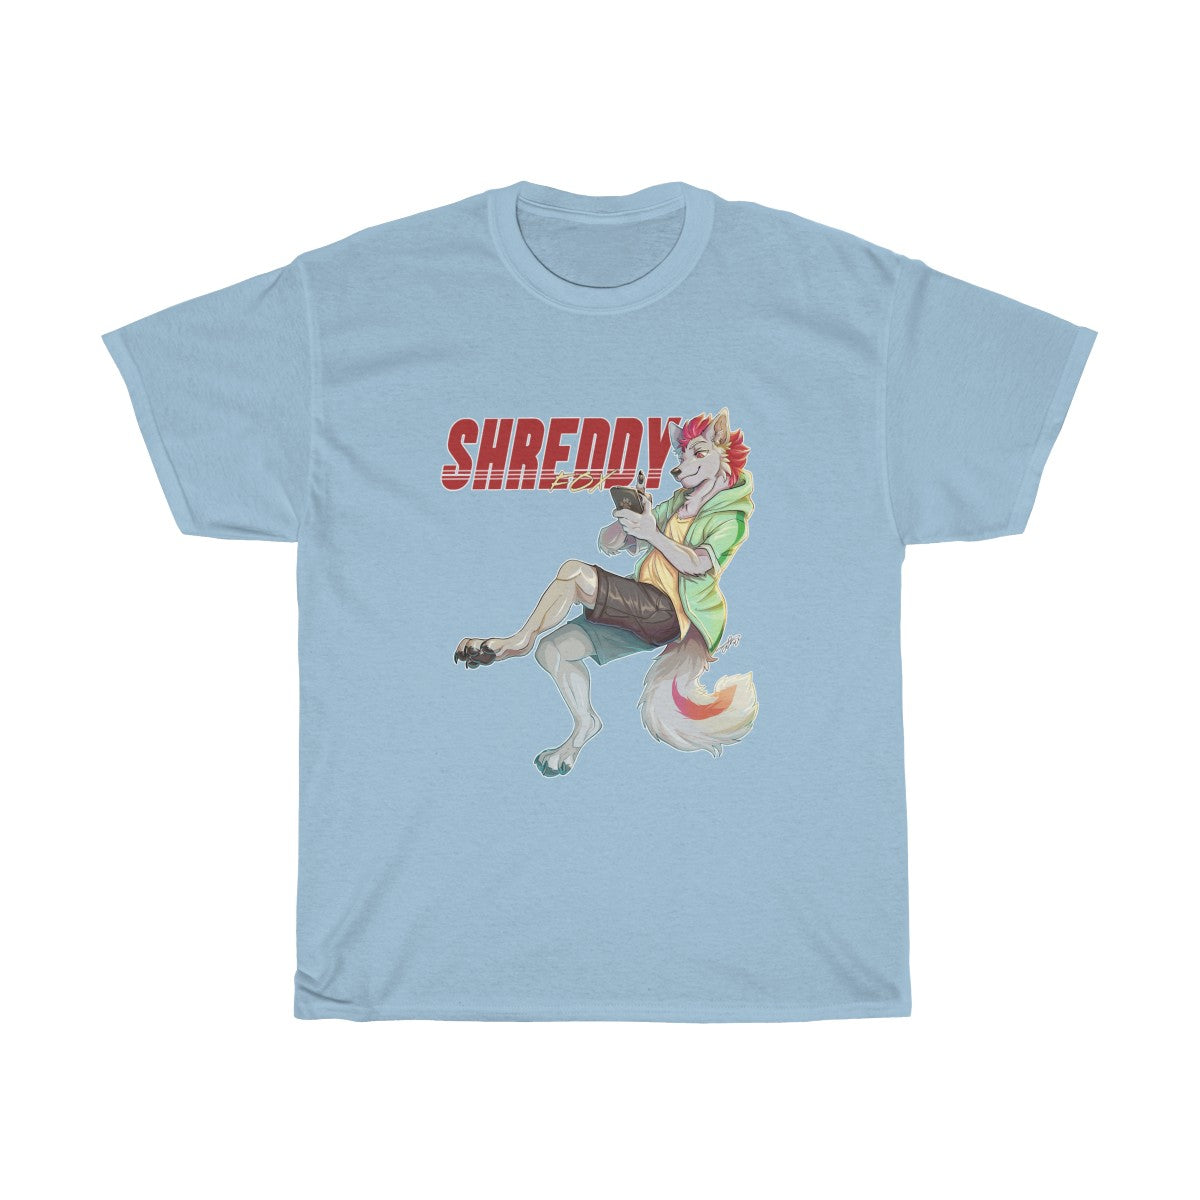 Scrolling - T-Shirt T-Shirt Shreddyfox Light Blue S 